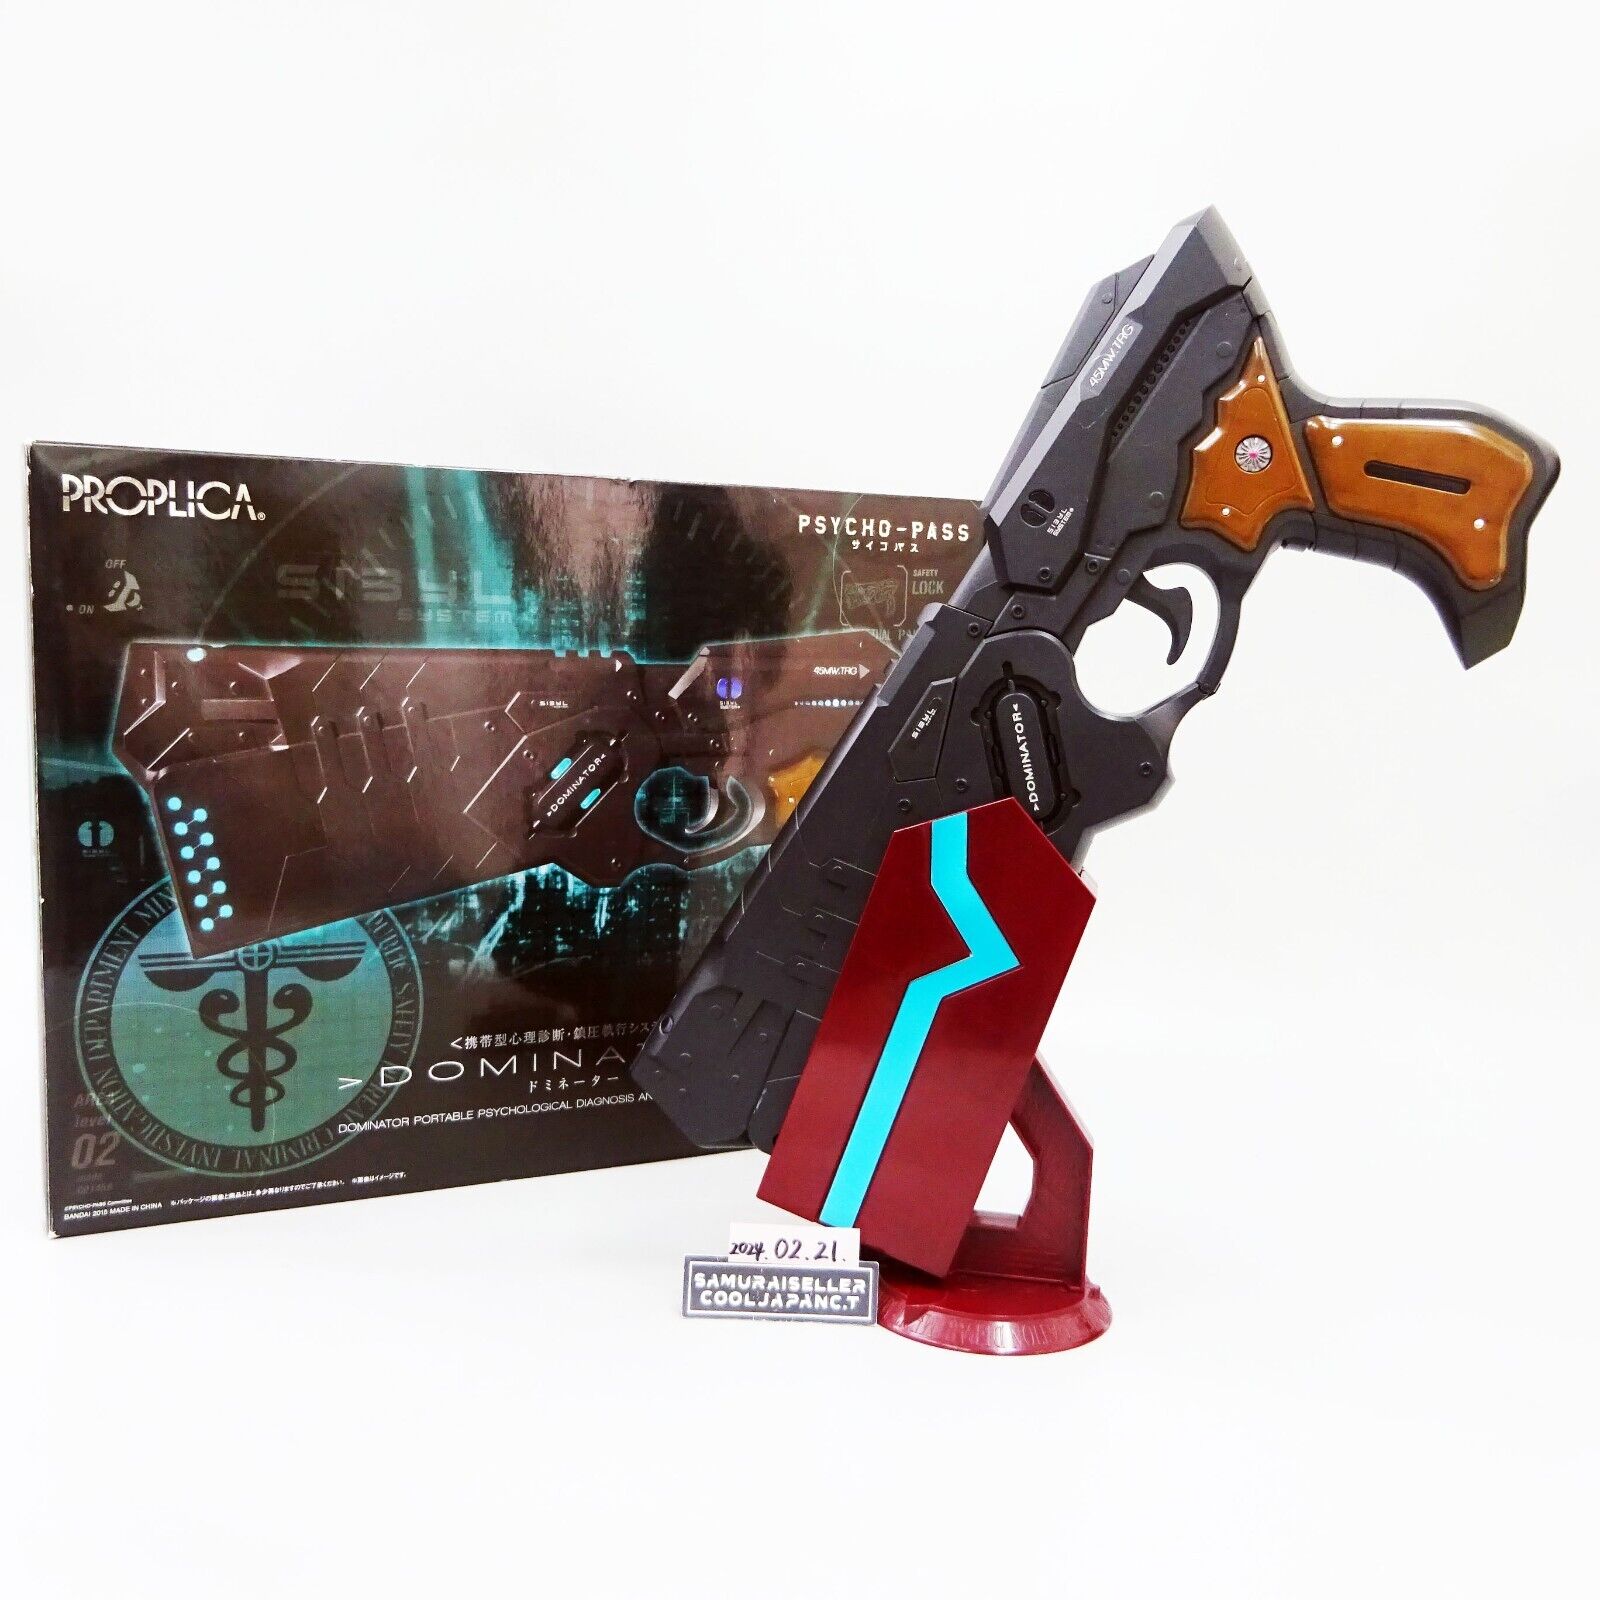 Psycho-Pass PROPLICA Dominator 1/1 Scale Gun Figure Light & Sound BAIDAI Used